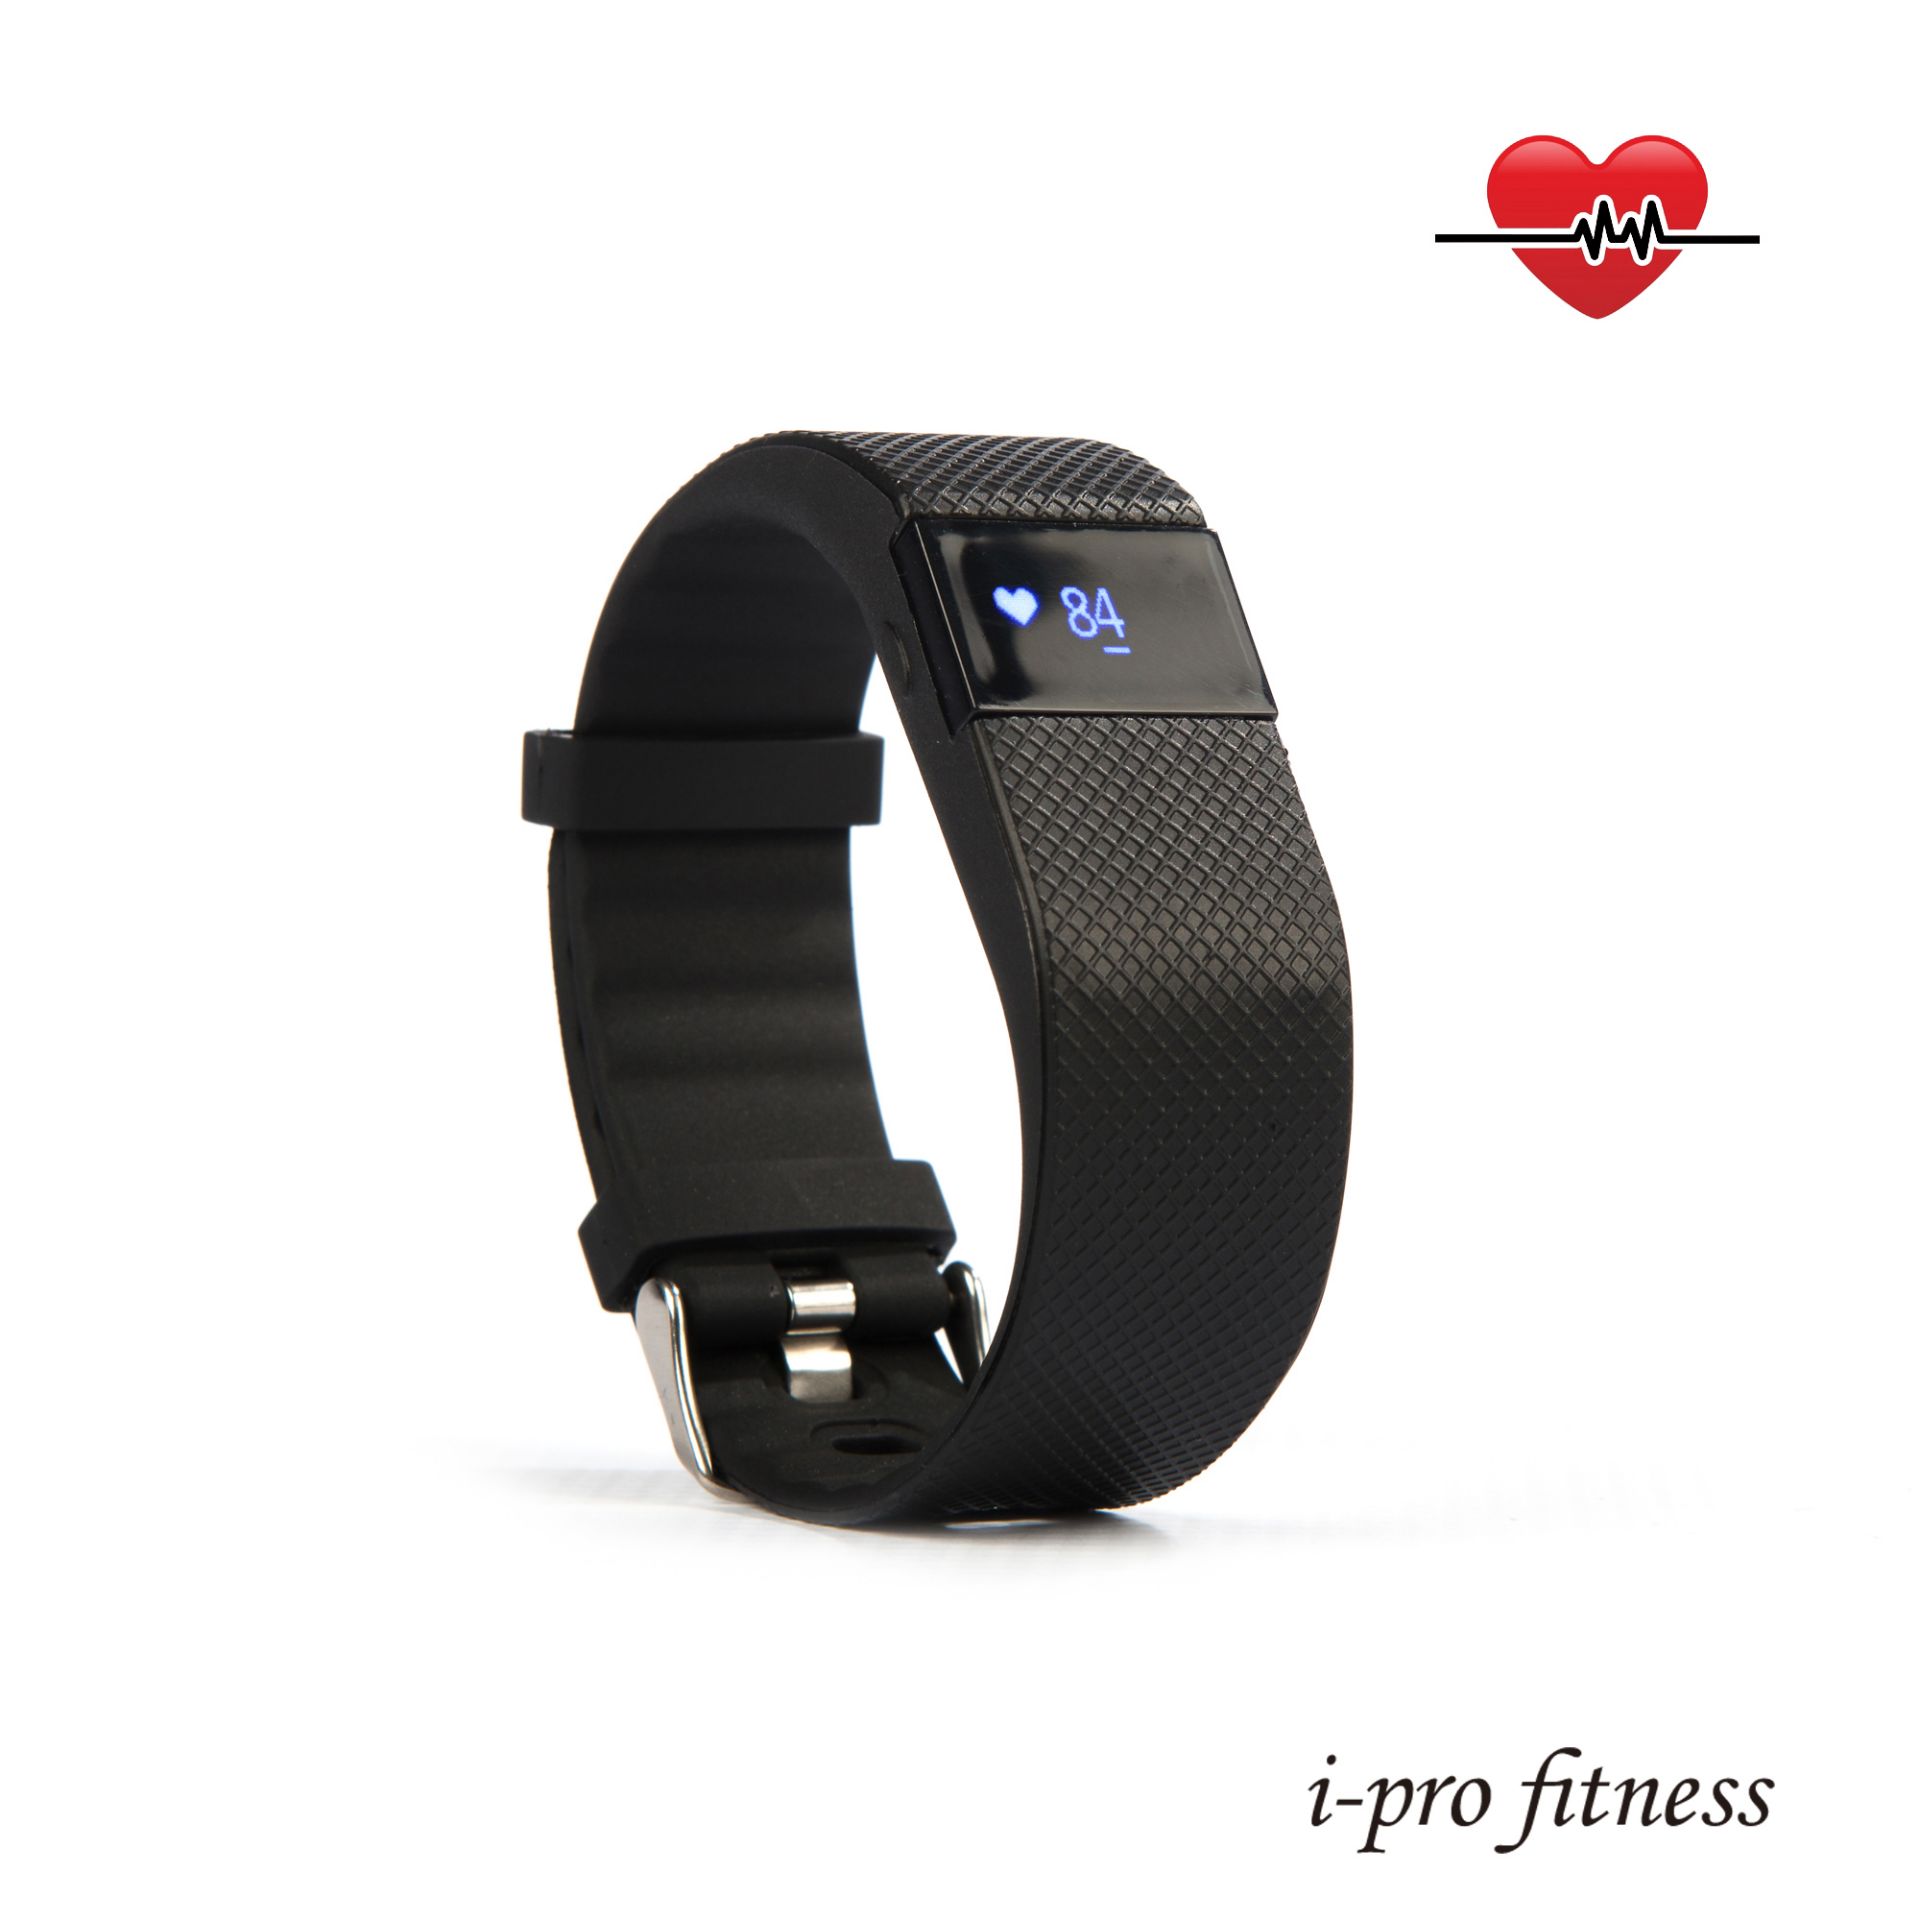 Fitness Tracker i-pro fitness, Bluetooth 4.0 Sports Smart Bracelet, Heart Rate Monitor - Image 4 of 8